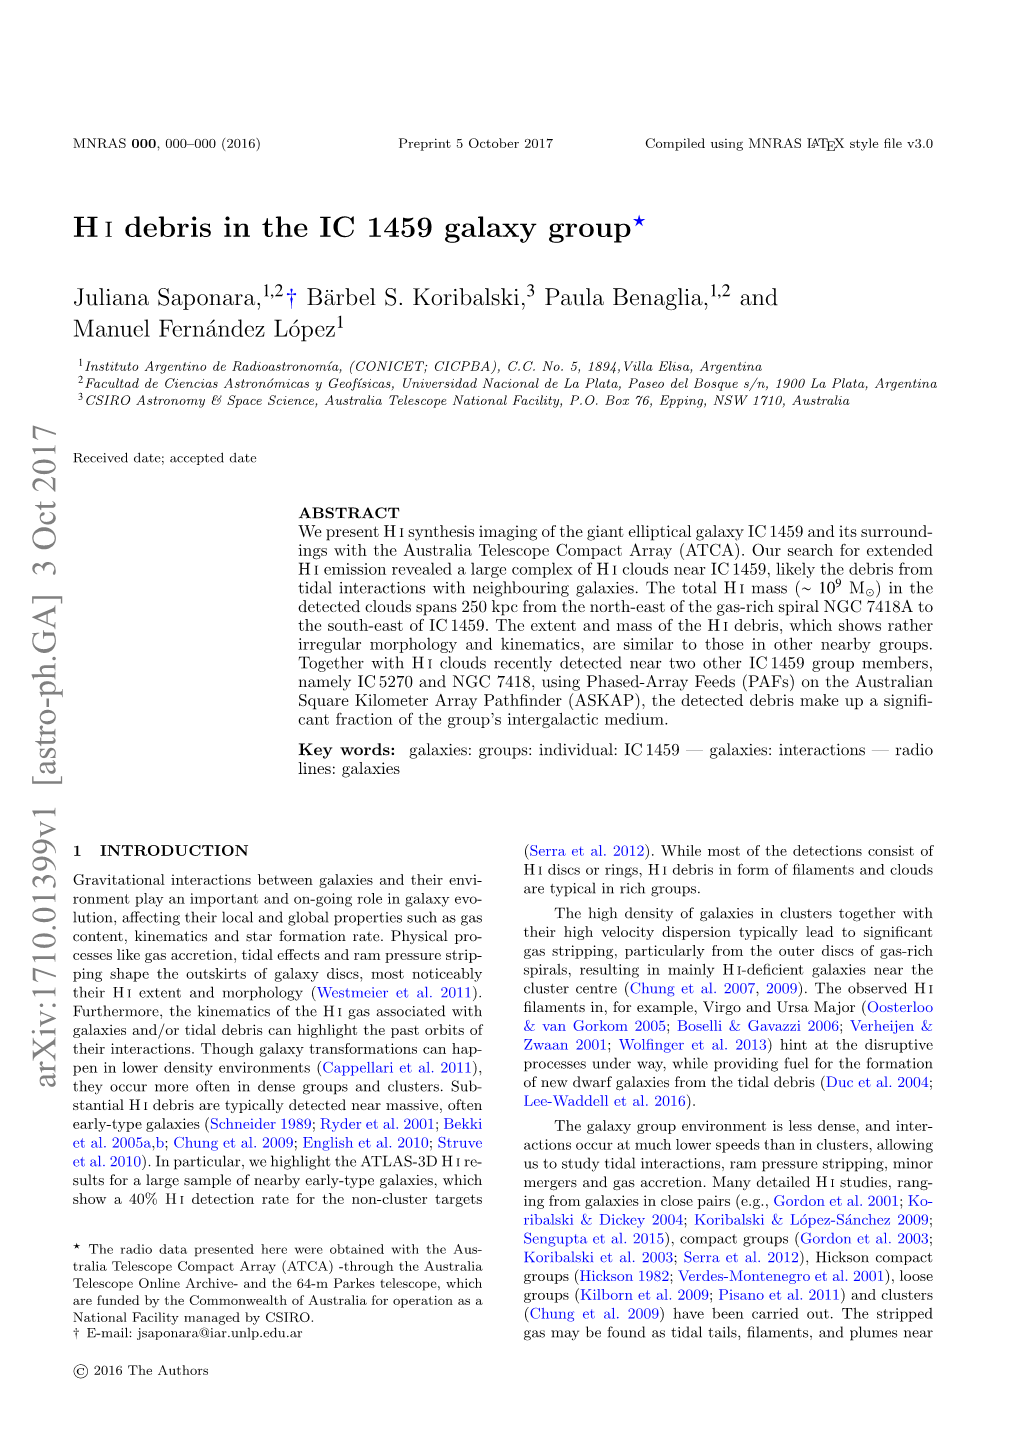 HI Debris in the IC 1459 Galaxy Group 3